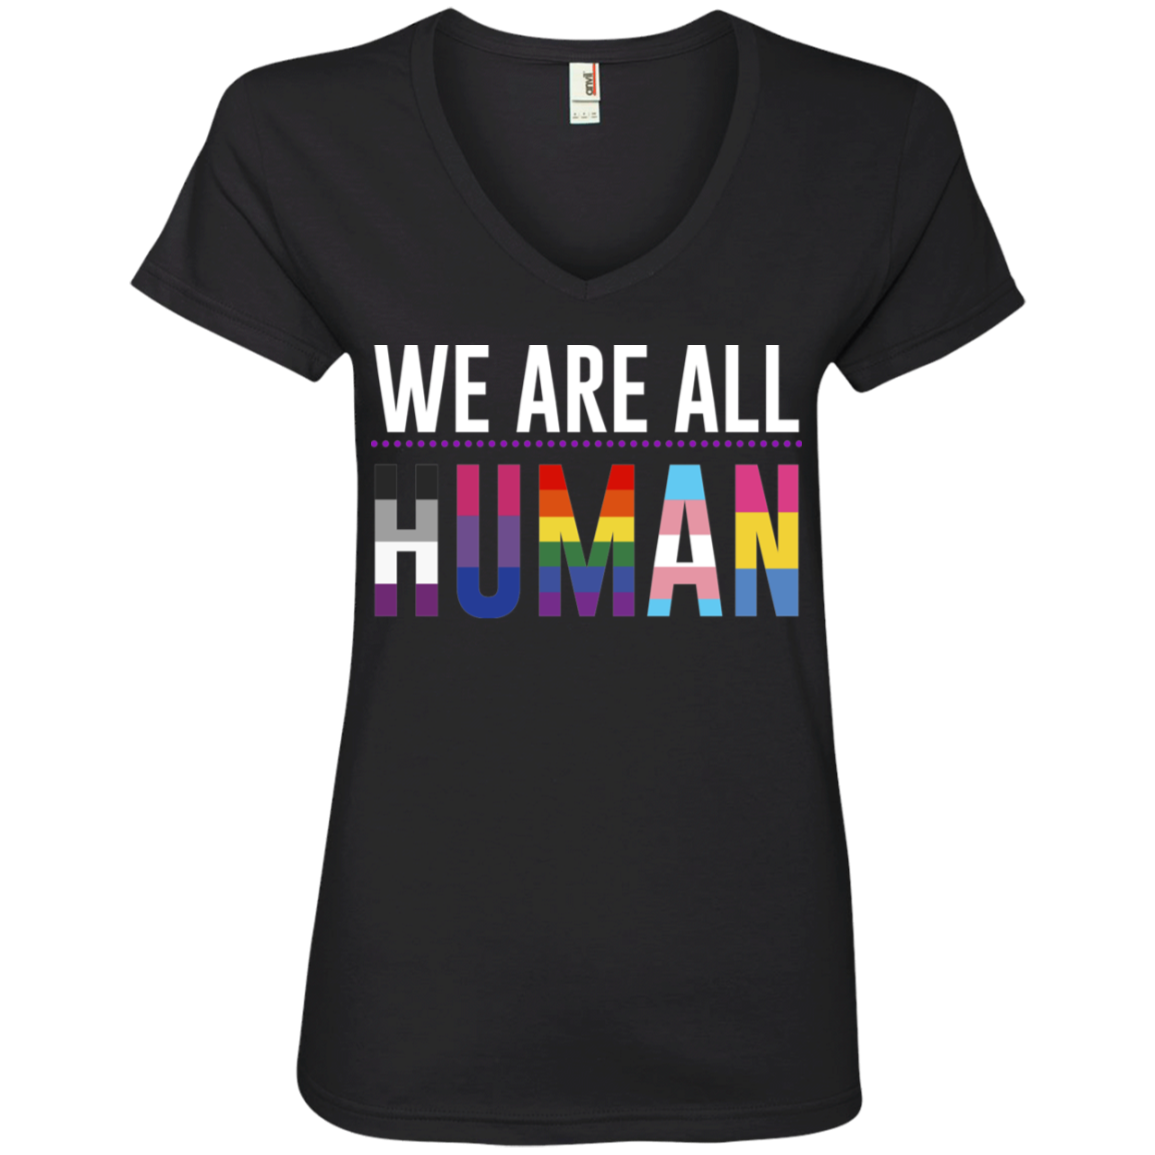 We Are All Human black T Shirt for women, half sleeves v neck tshirt for women